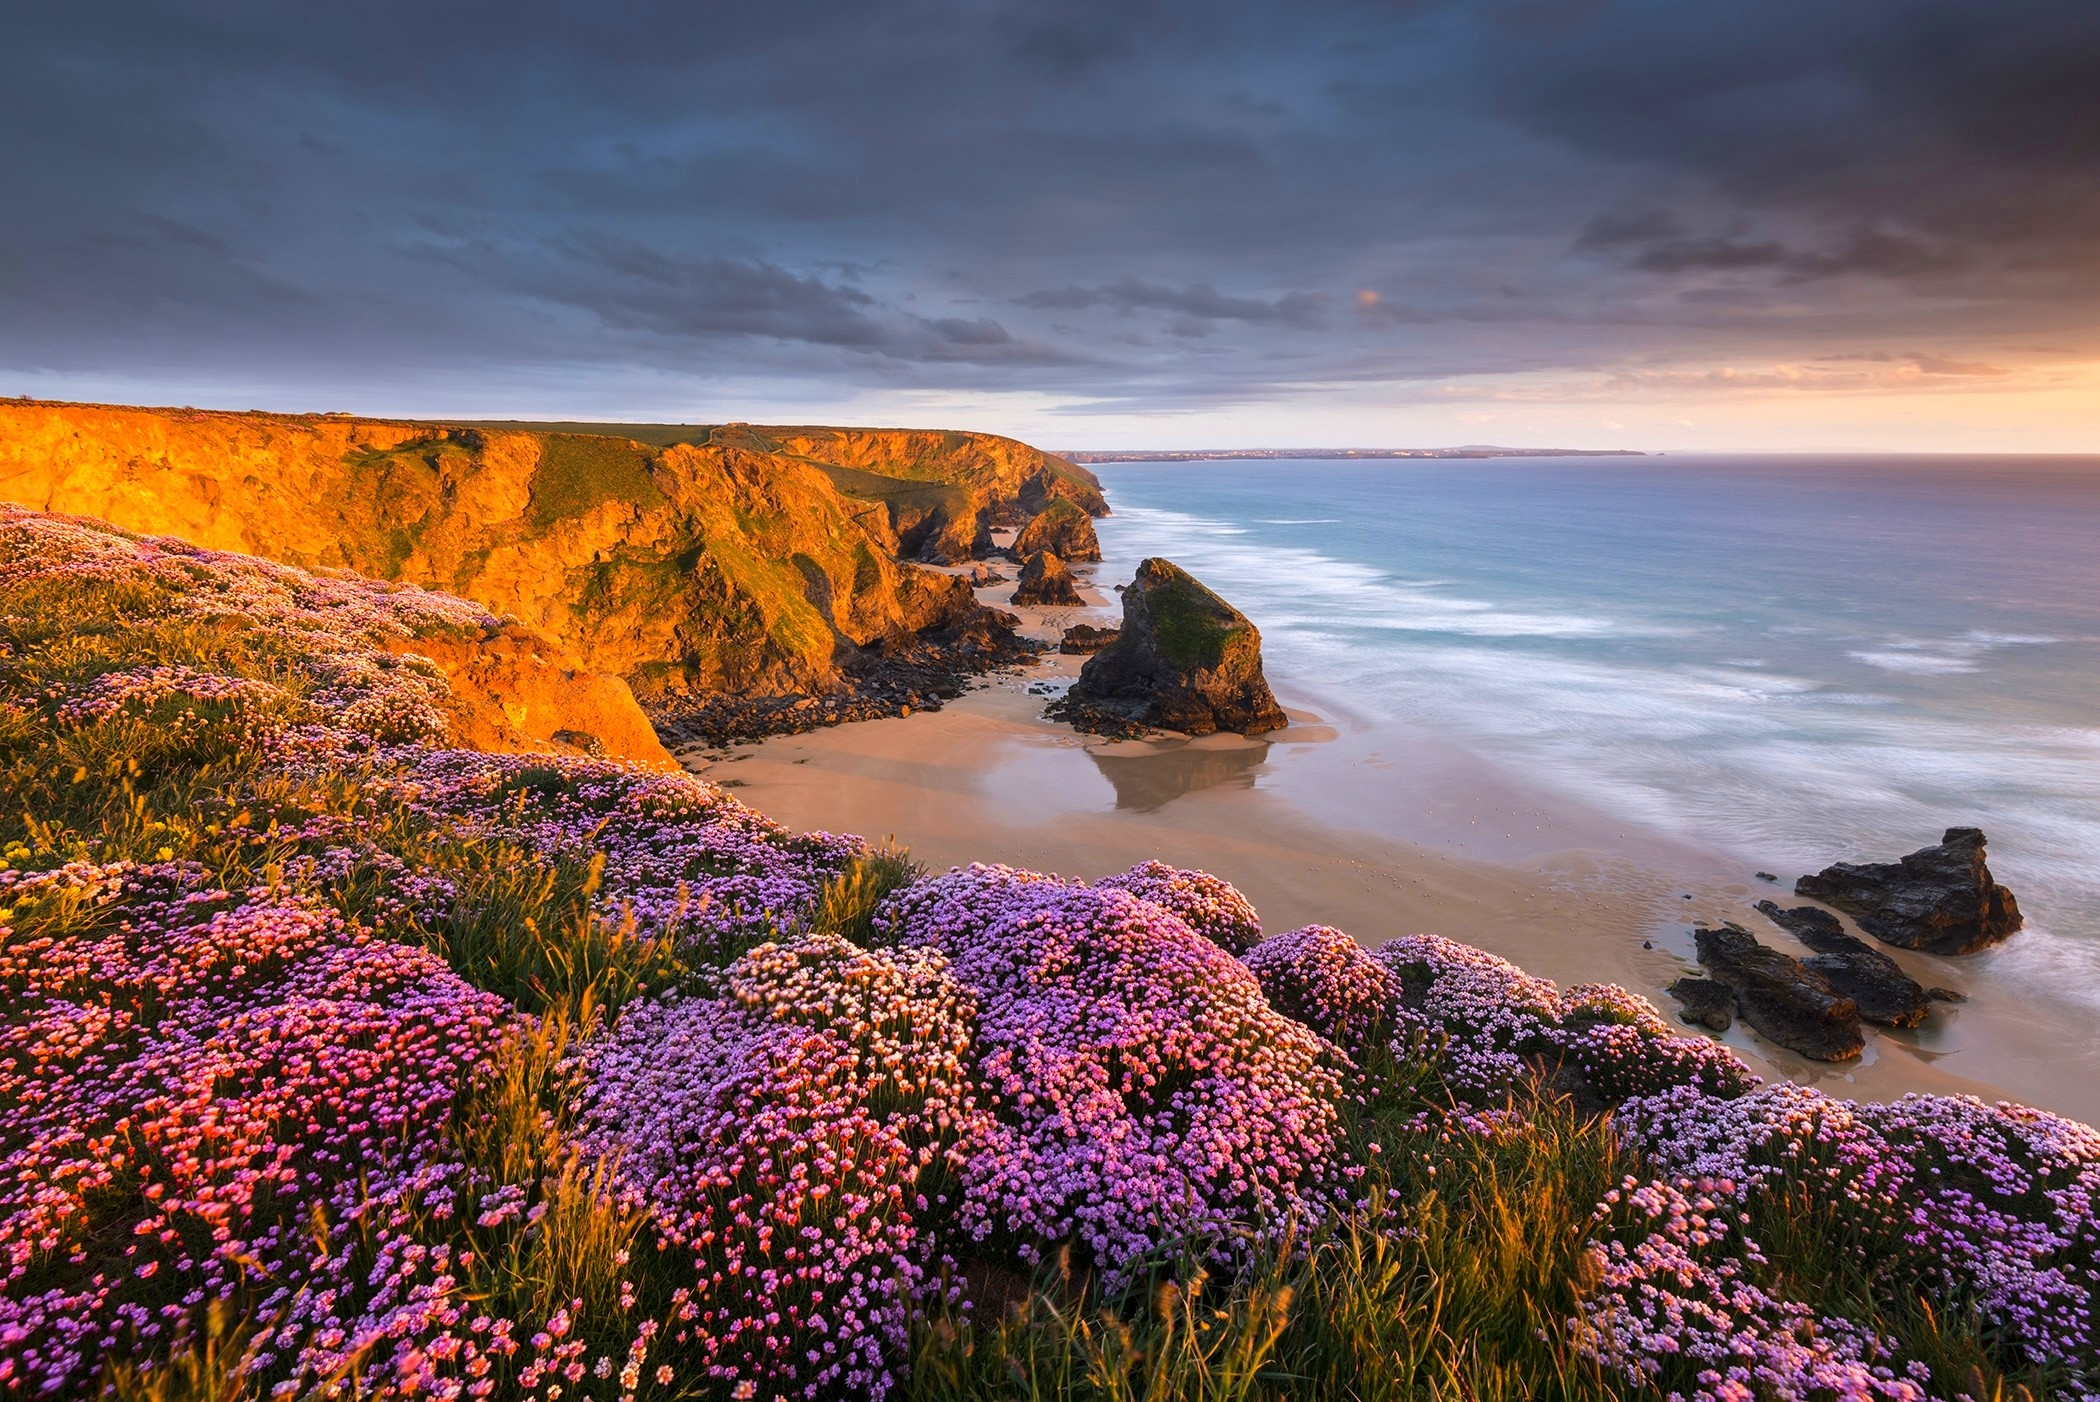 General 2100x1402 coast beach flowers sunset sand sea cliff clouds rocks nature landscape